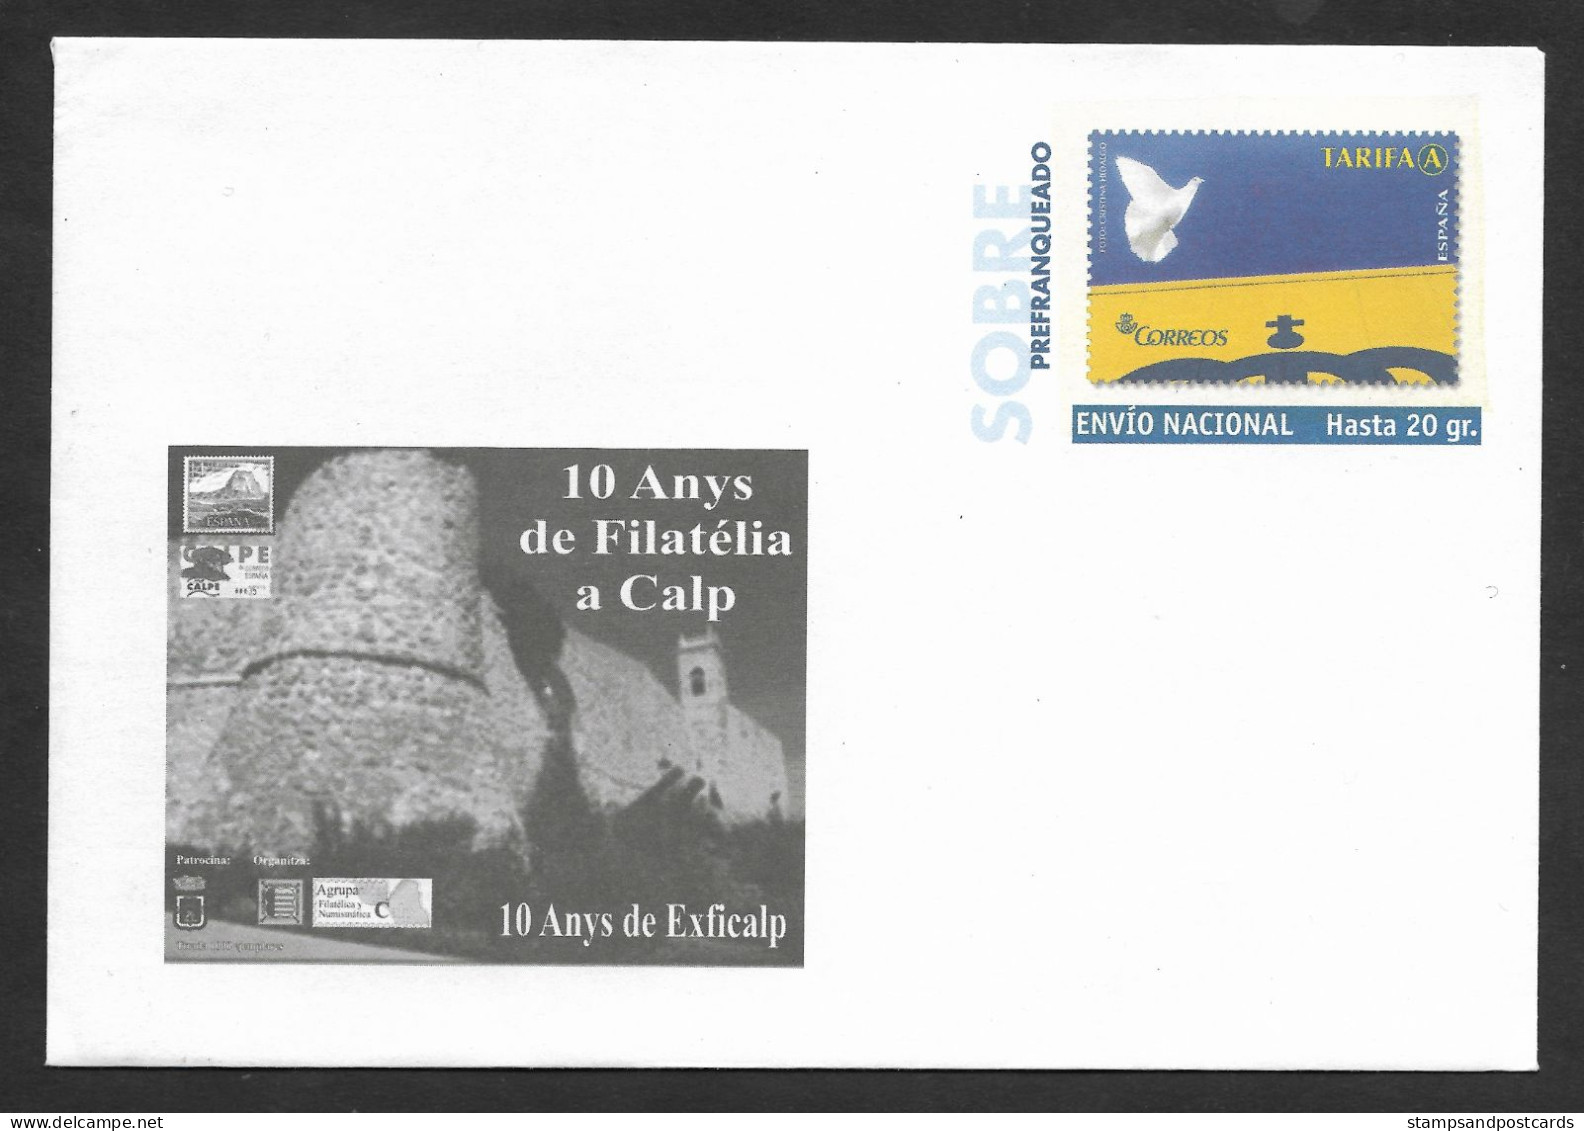 Espagne Entier Postal Type PAP 2005 Repiqué Calp Spain Postal Stationery Cover With Reprint España Sobre Entero Repicado - 1931-....